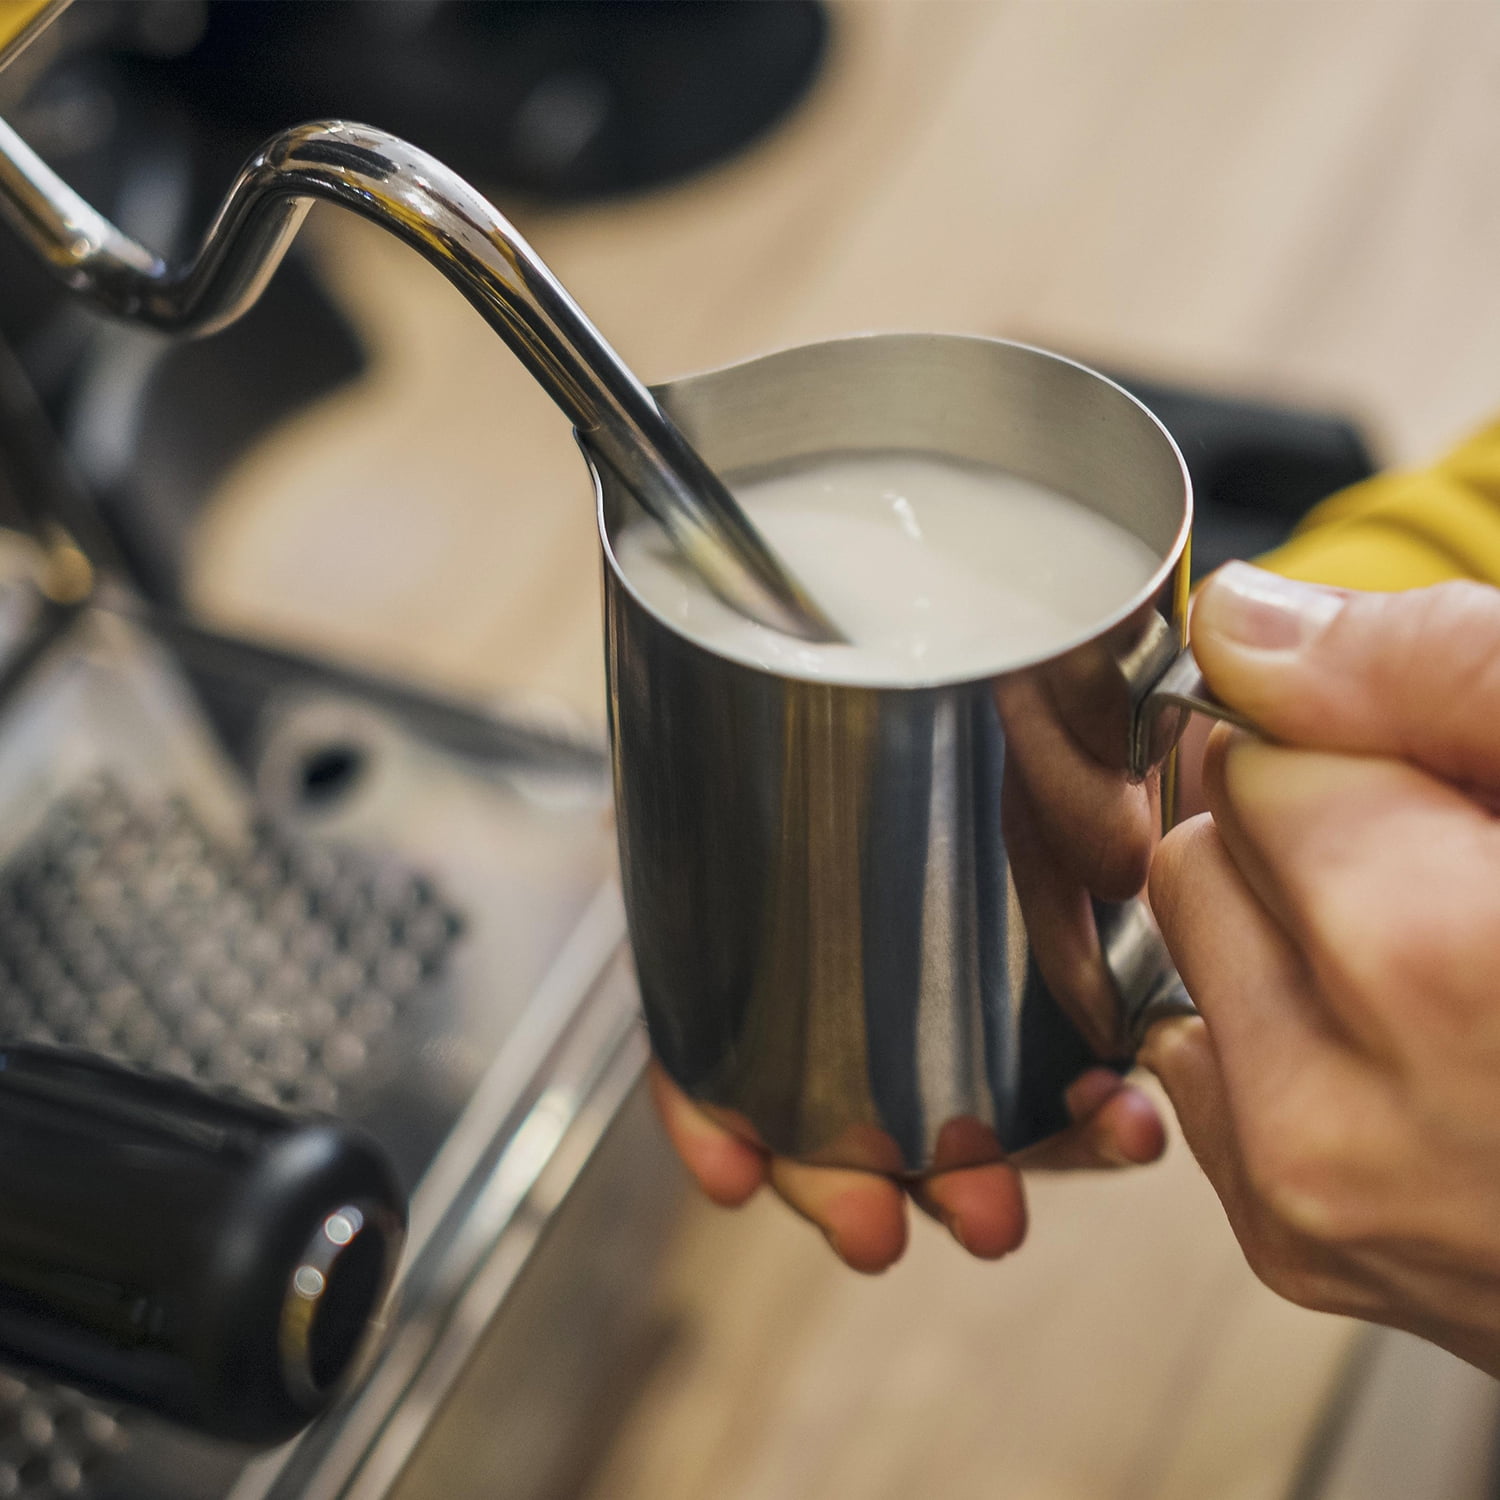  Milk Frother Cup Frothing Pitcher: KitchenBoss Stainless Steel  Espresso Steaming Pitcher 12 Oz (350ml), Latte Art Pitcher Metal Milk  Steamer Jug : Home & Kitchen